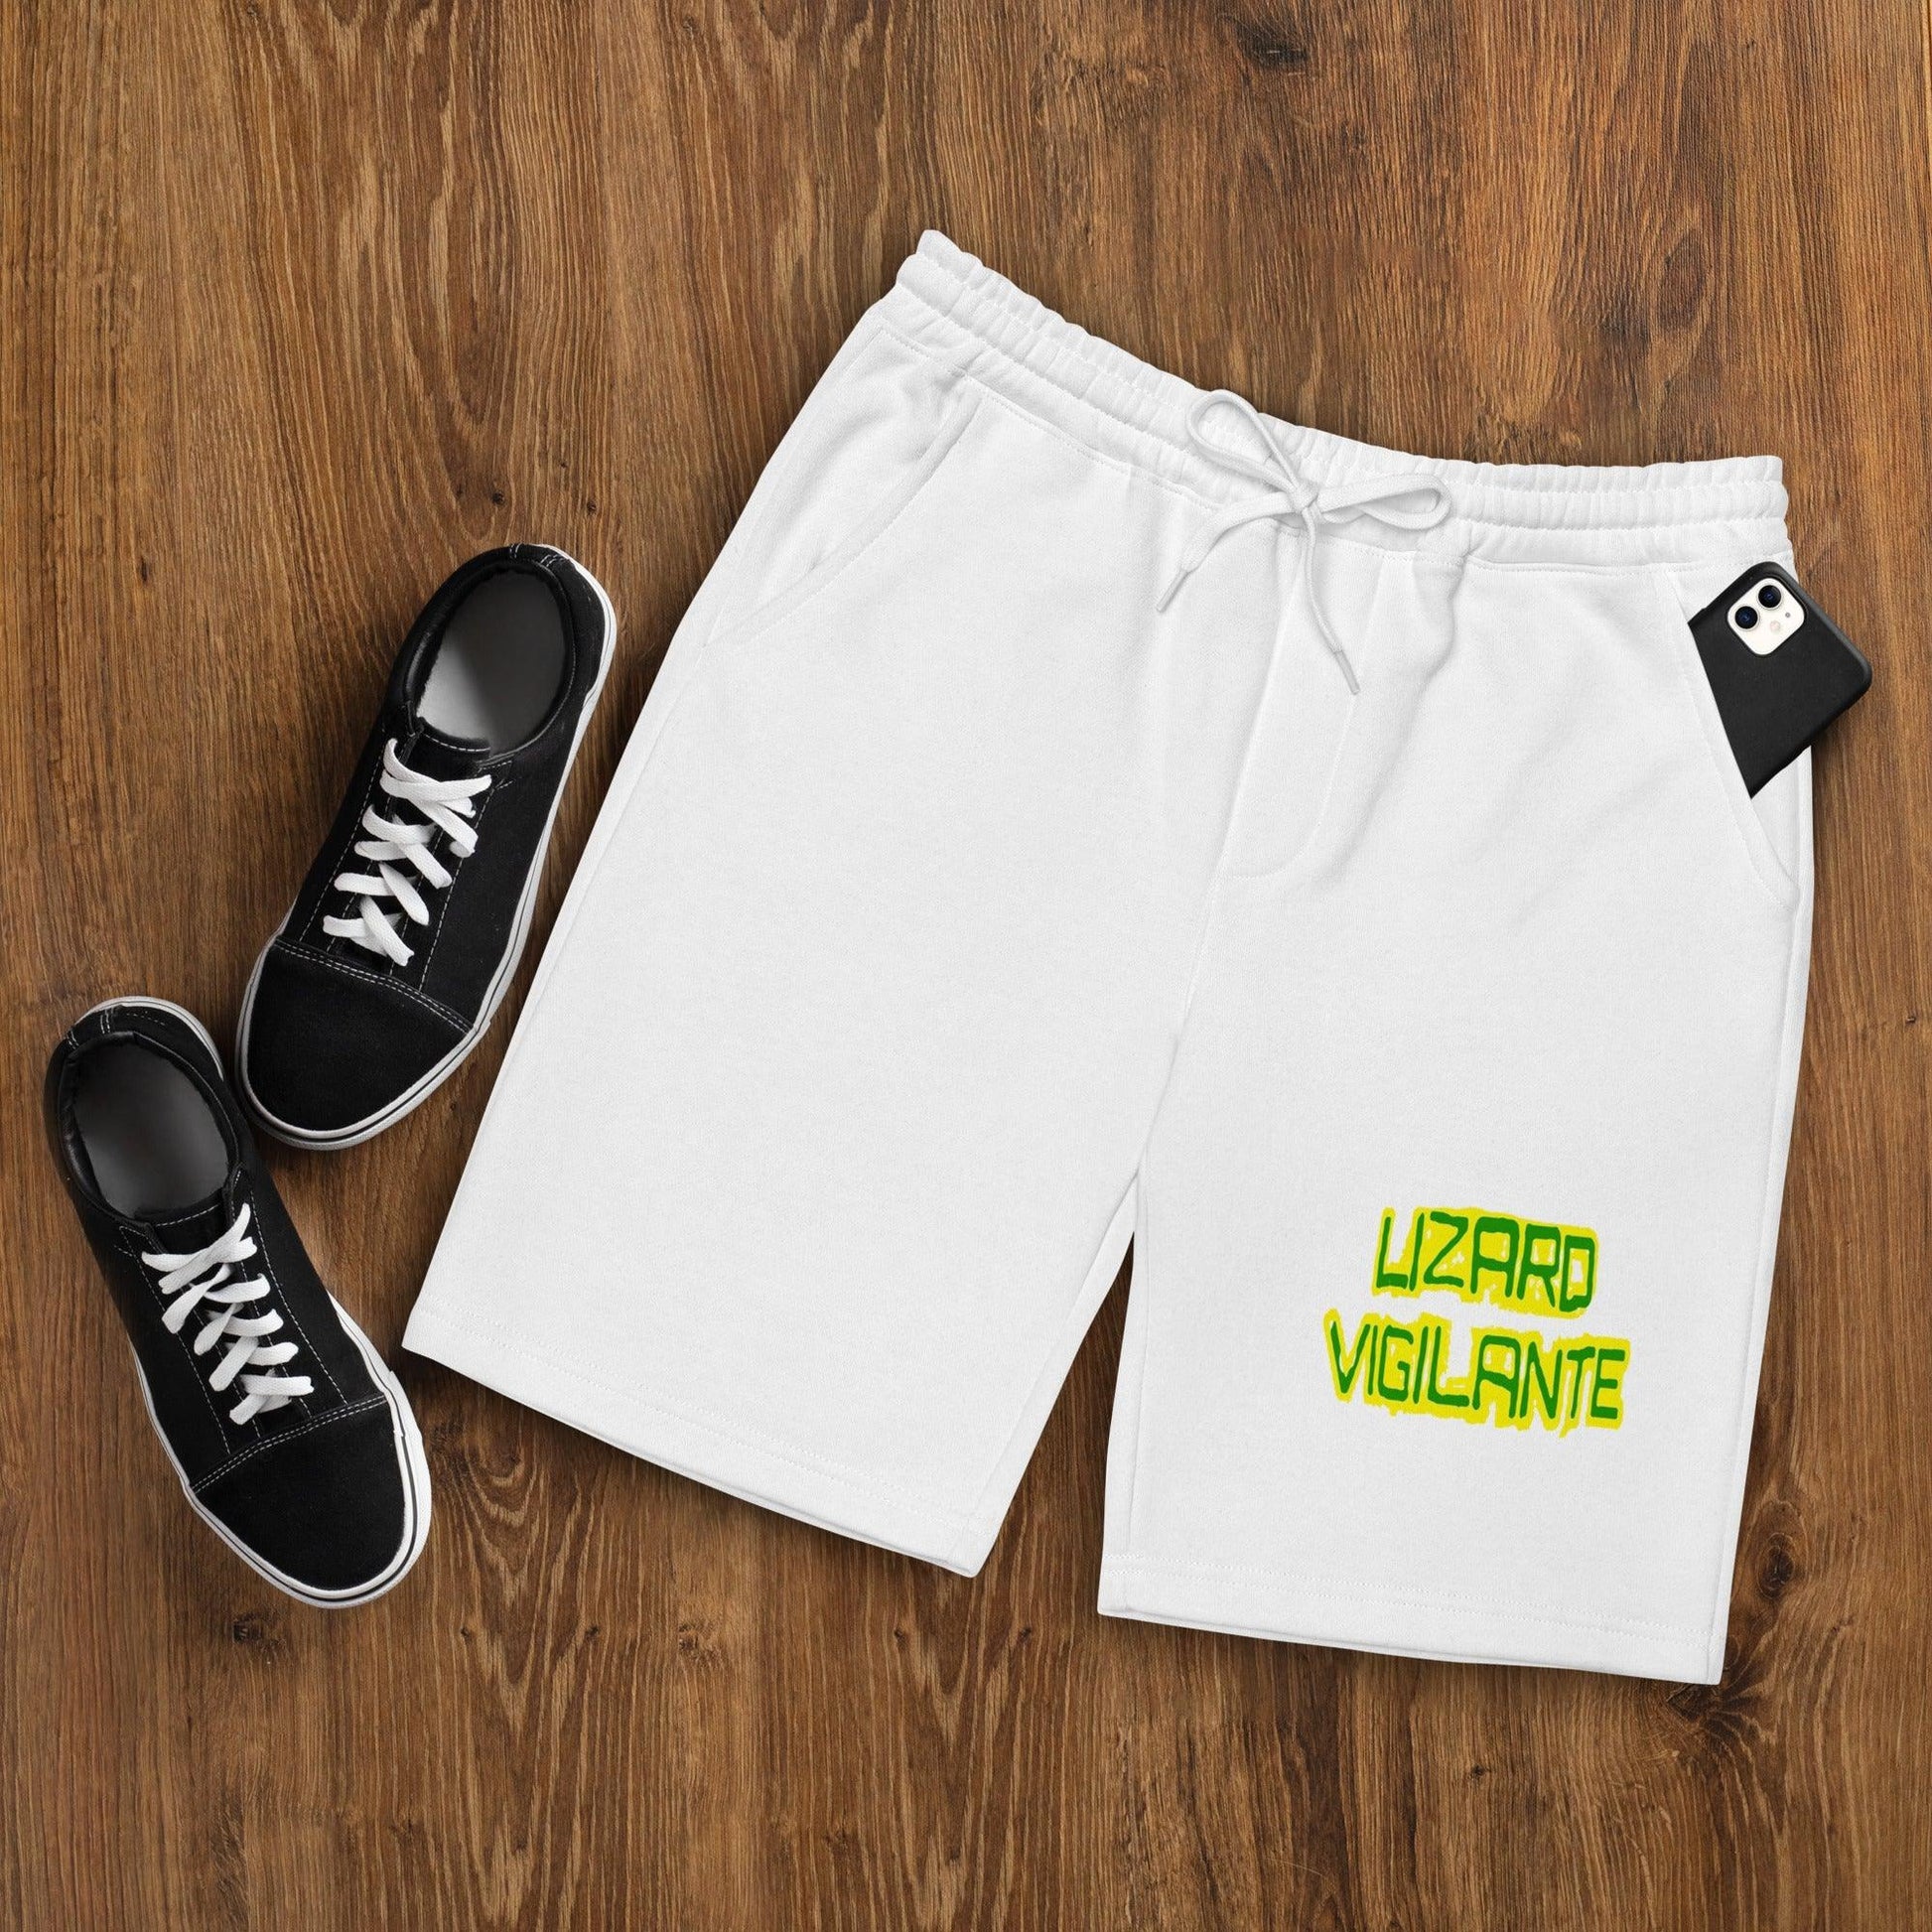 Lizard Vigilante Logoo Men's fleece shorts - Lizard Vigilante